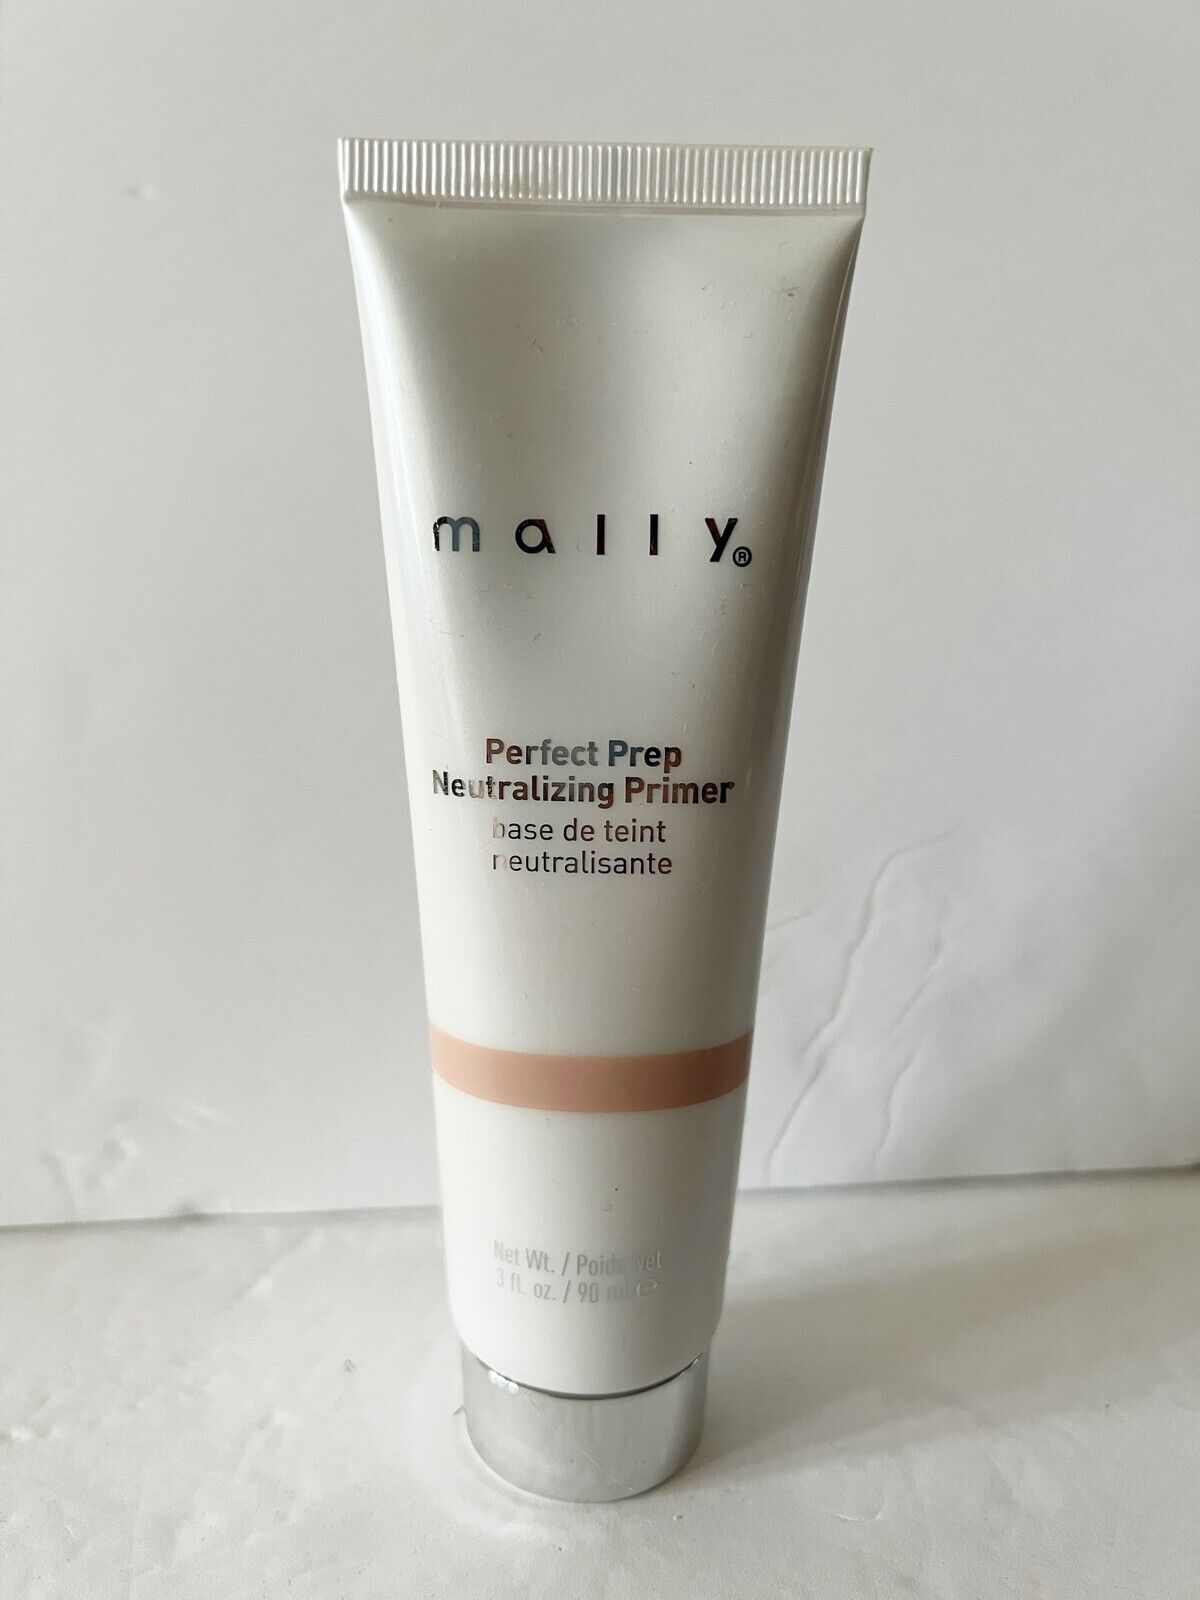 Mally Perfect Prep Neutralizing Primer  3 oz / 90ml NWOB - $16.82